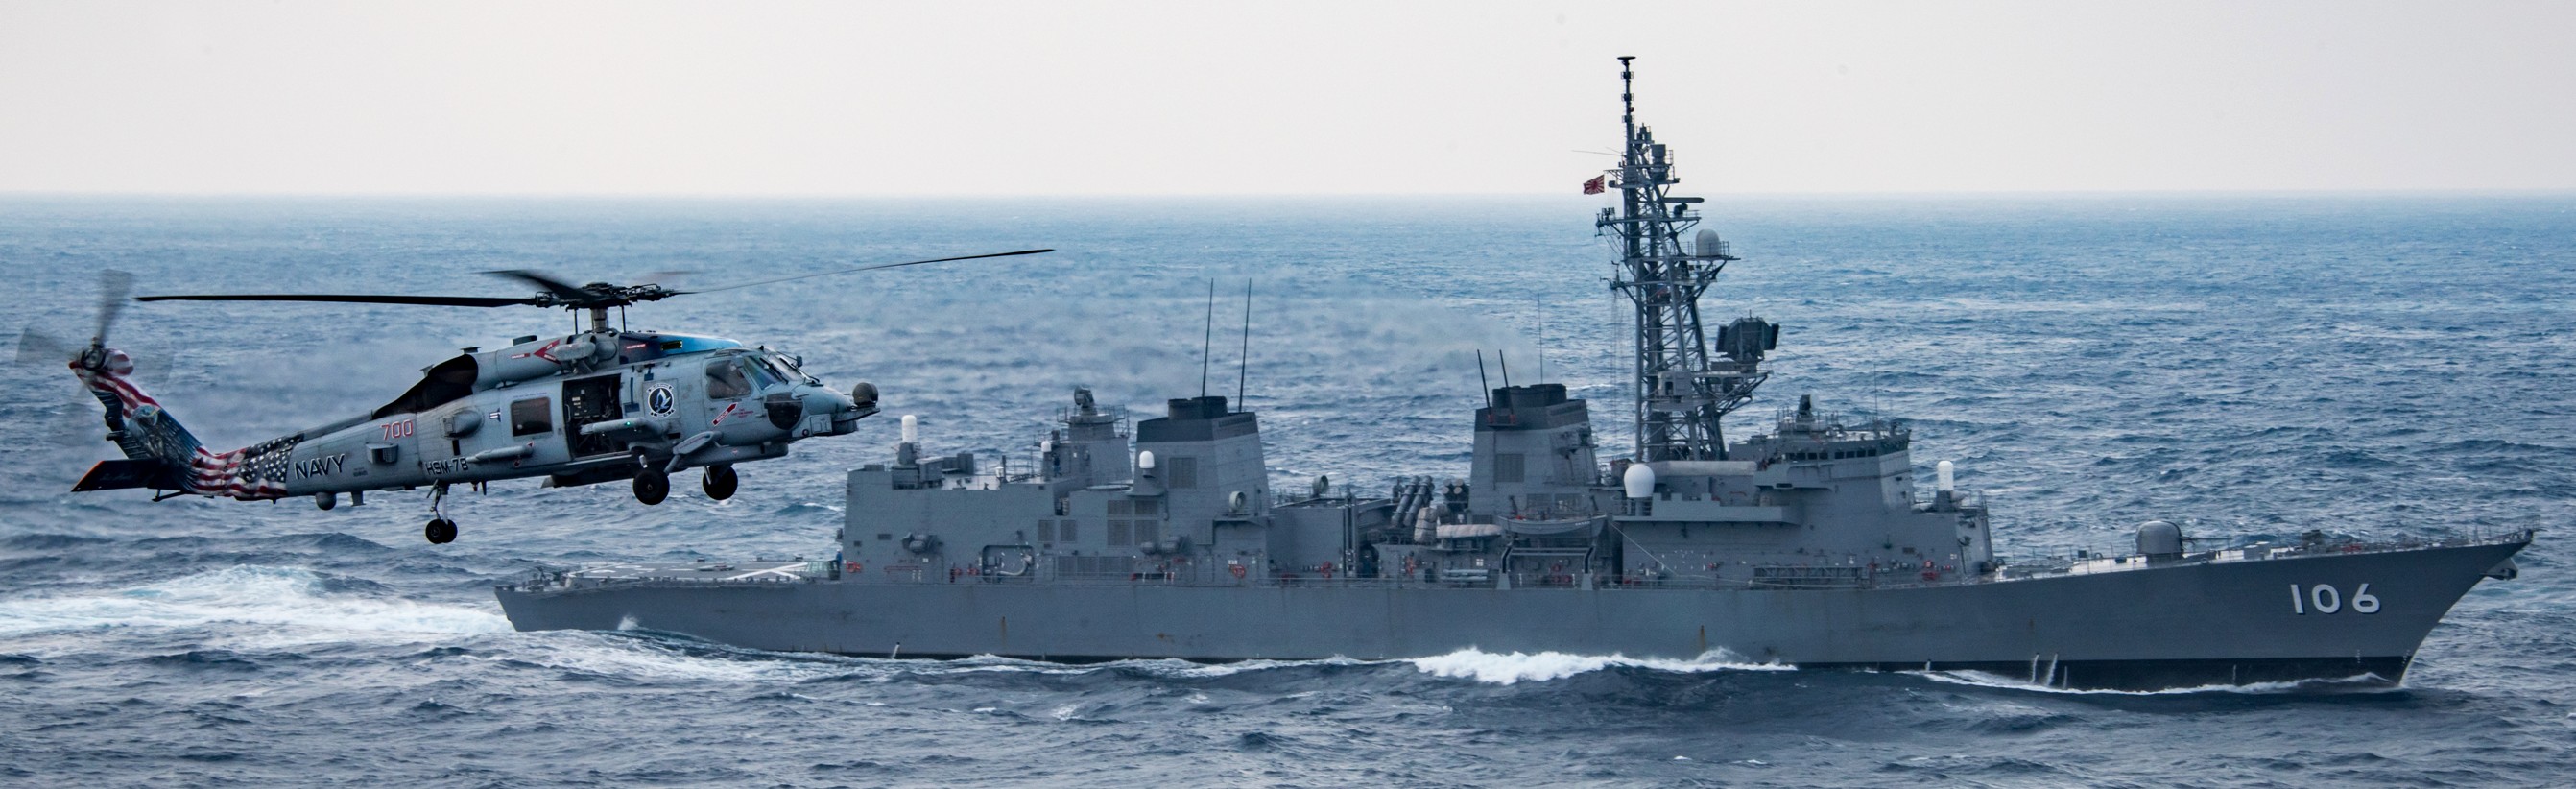 dd-106 js samidare murasame class destroyer japan maritime self defense force jmsdf 20